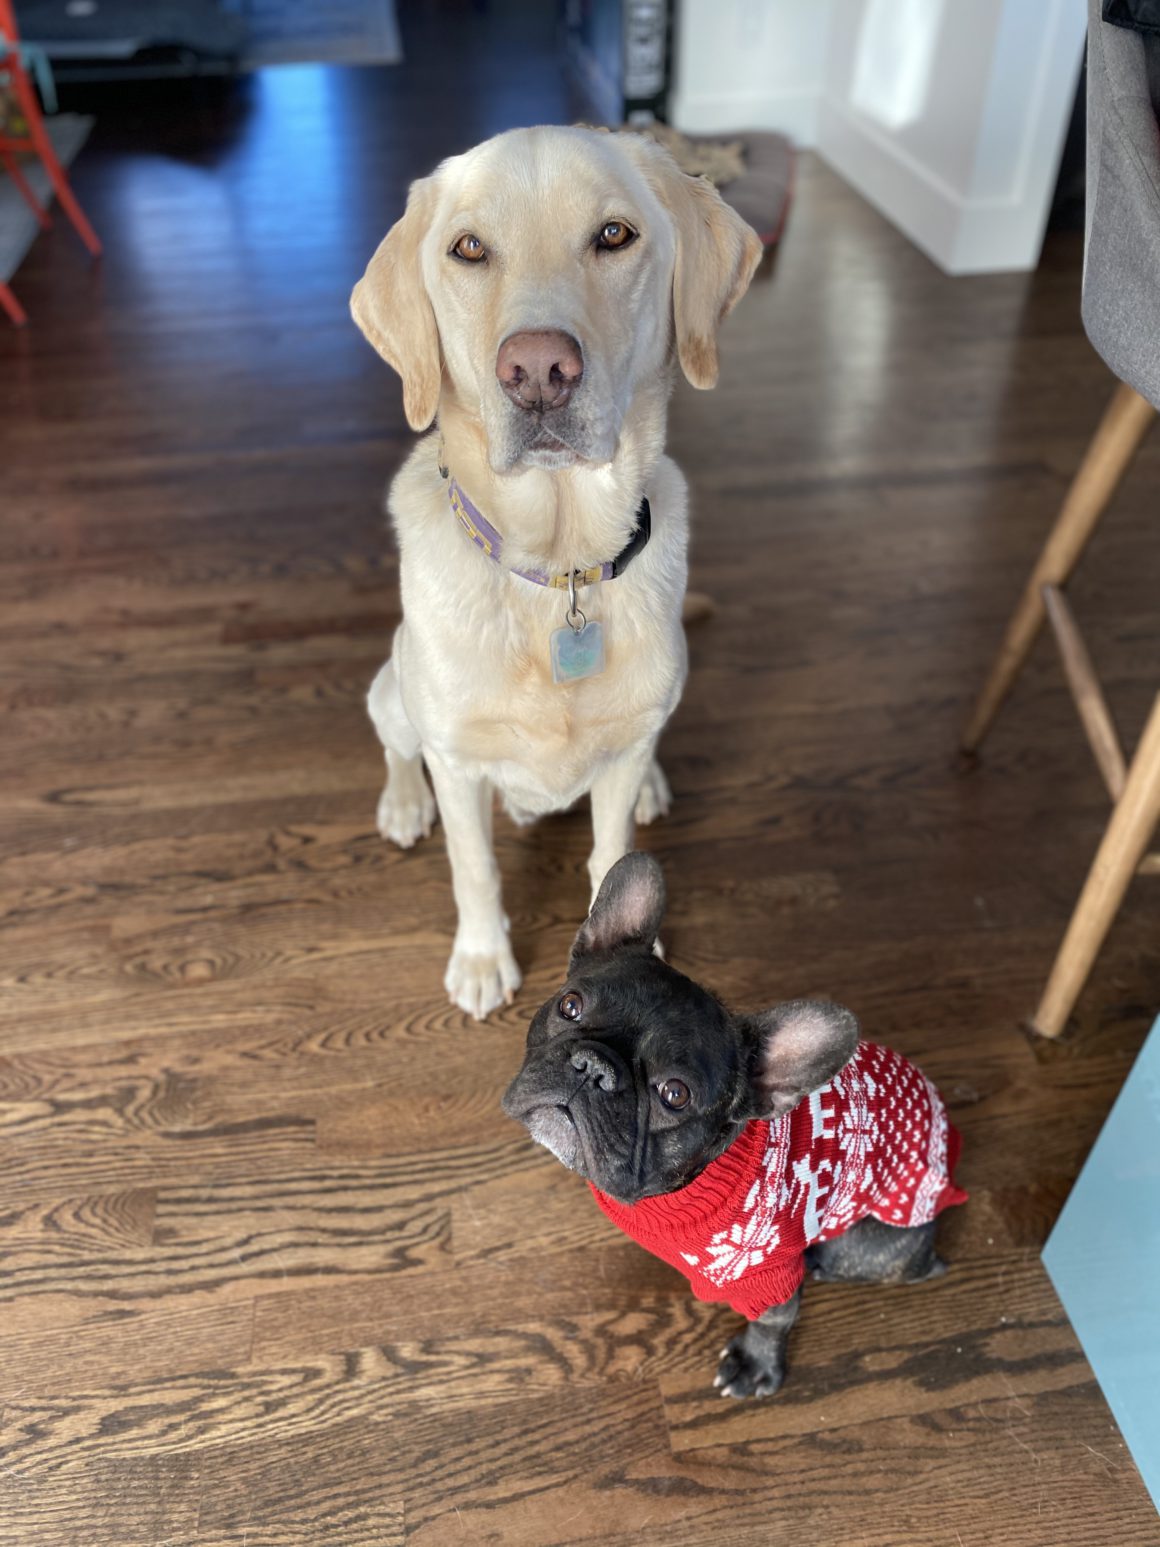 lrbrador dog and black pug dog wearing a sweater